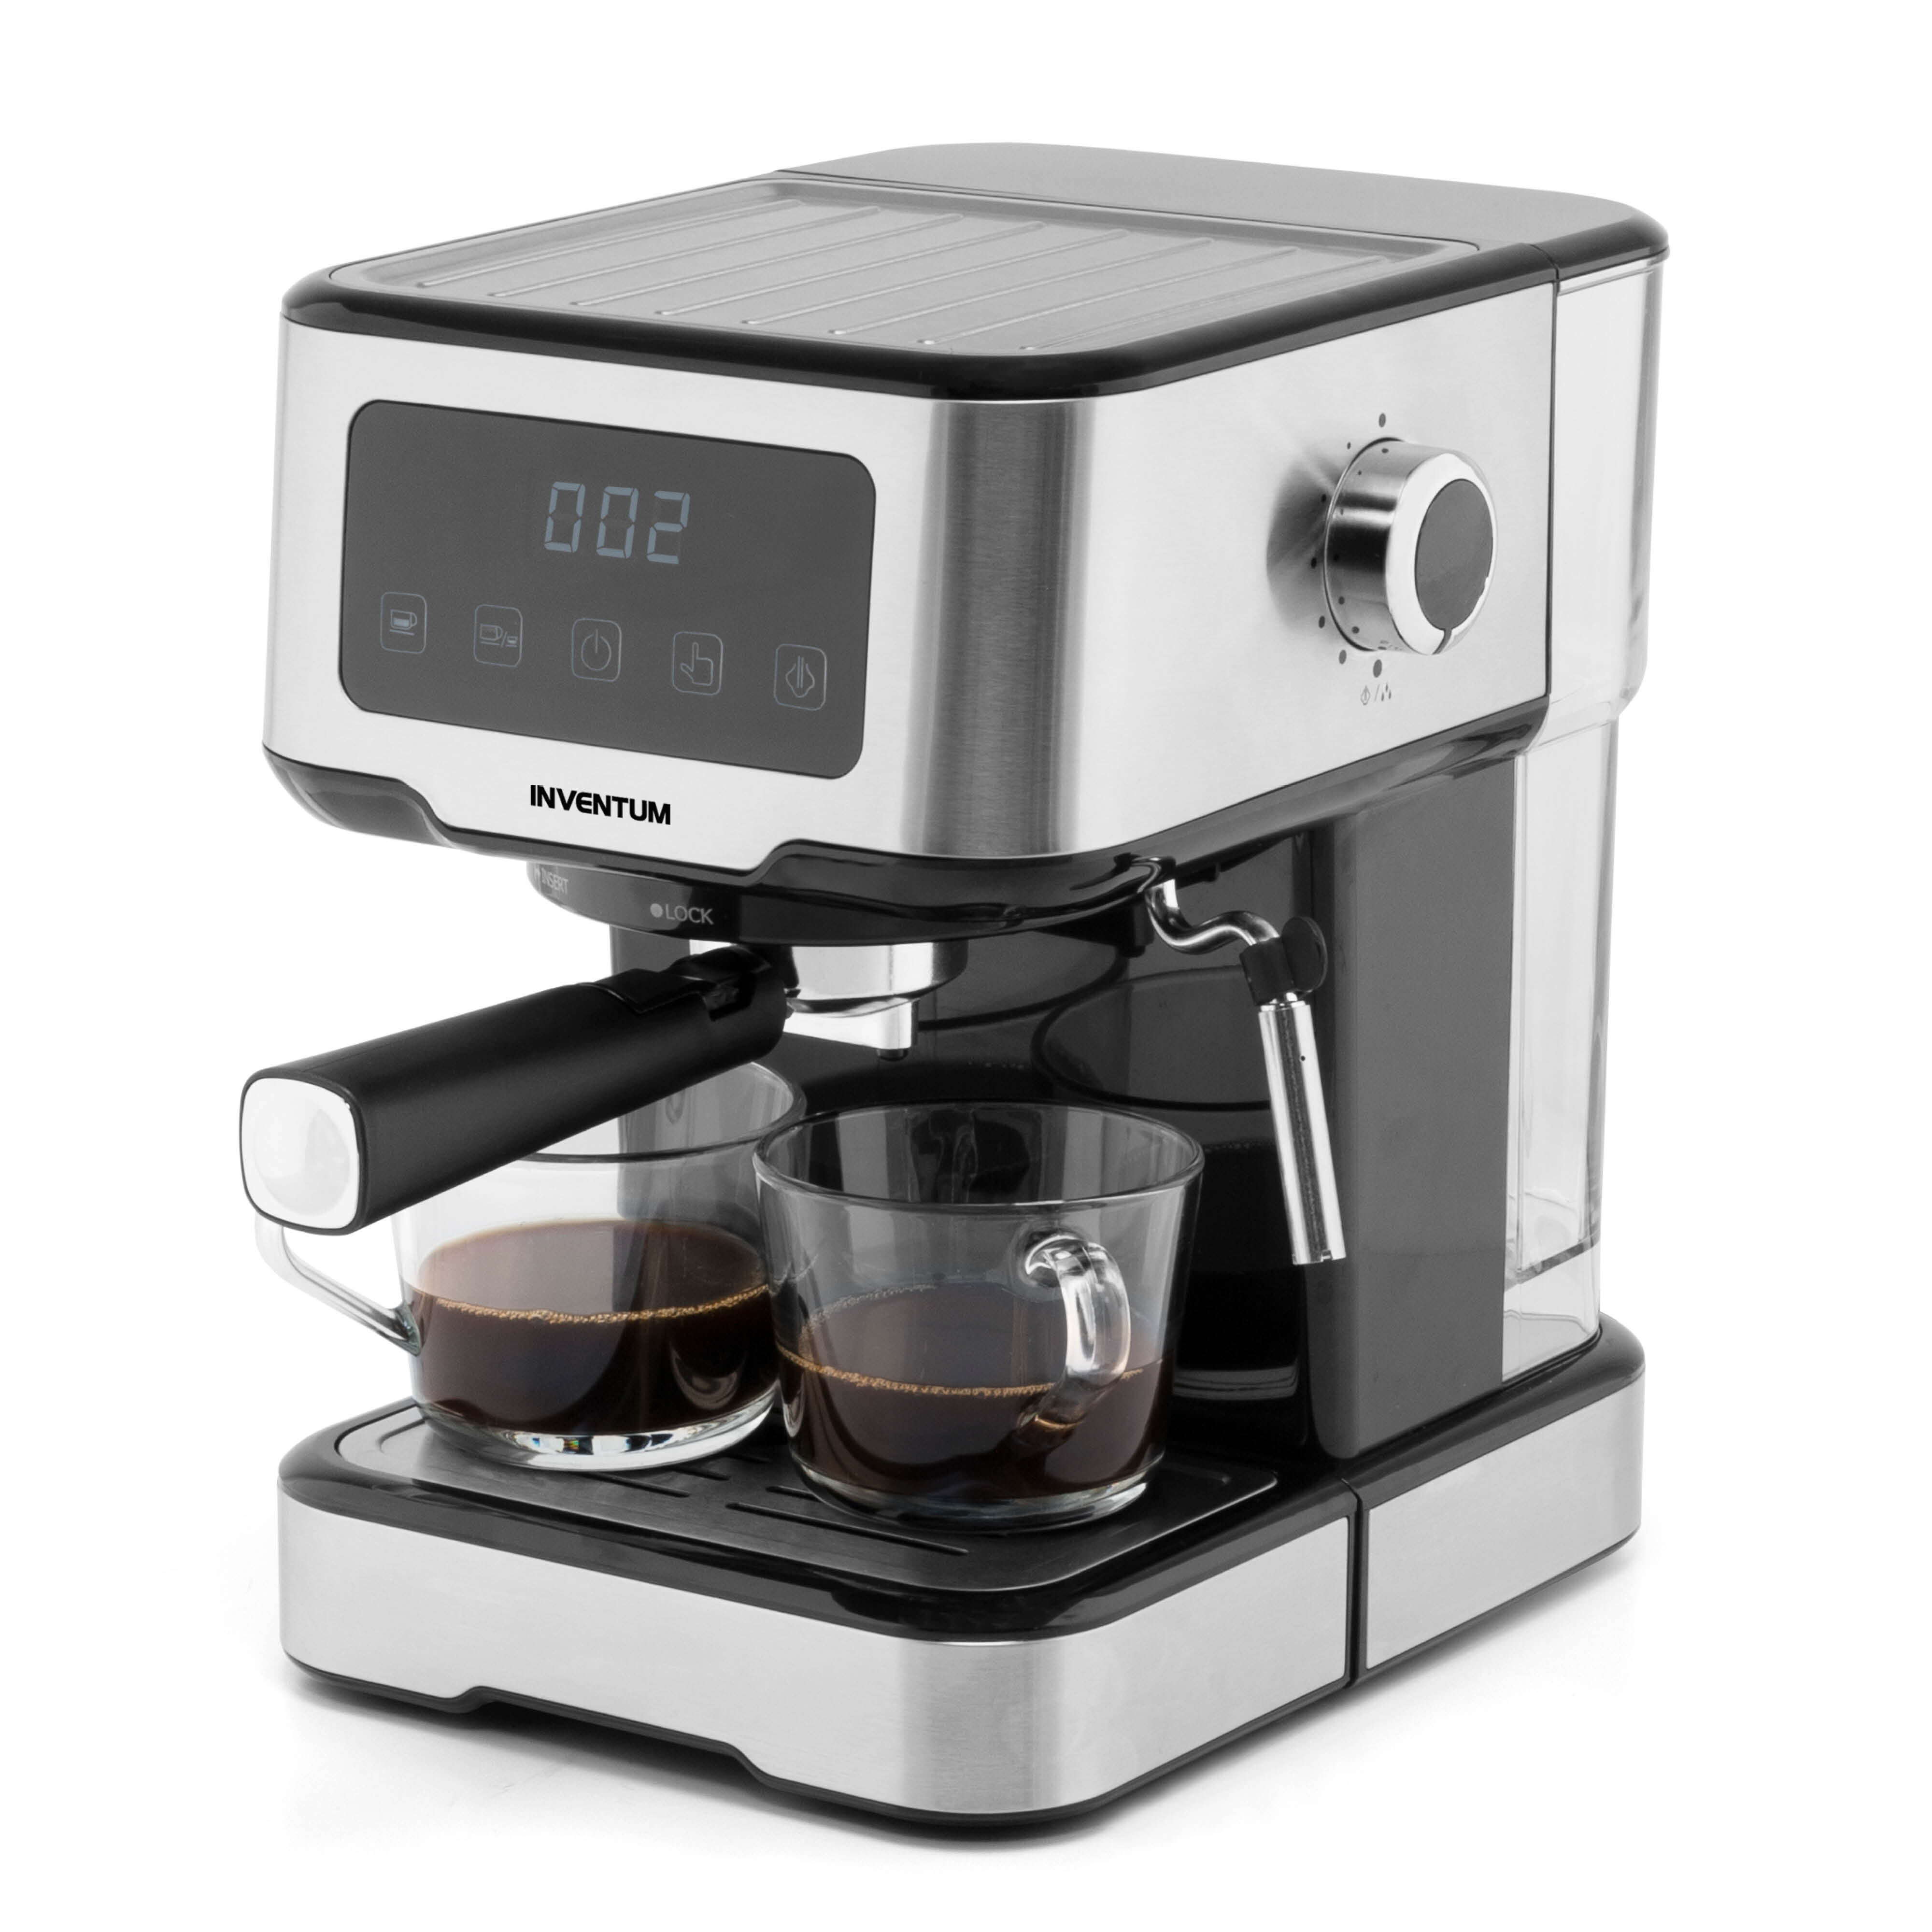 Inventum KZ910PD coffee maker